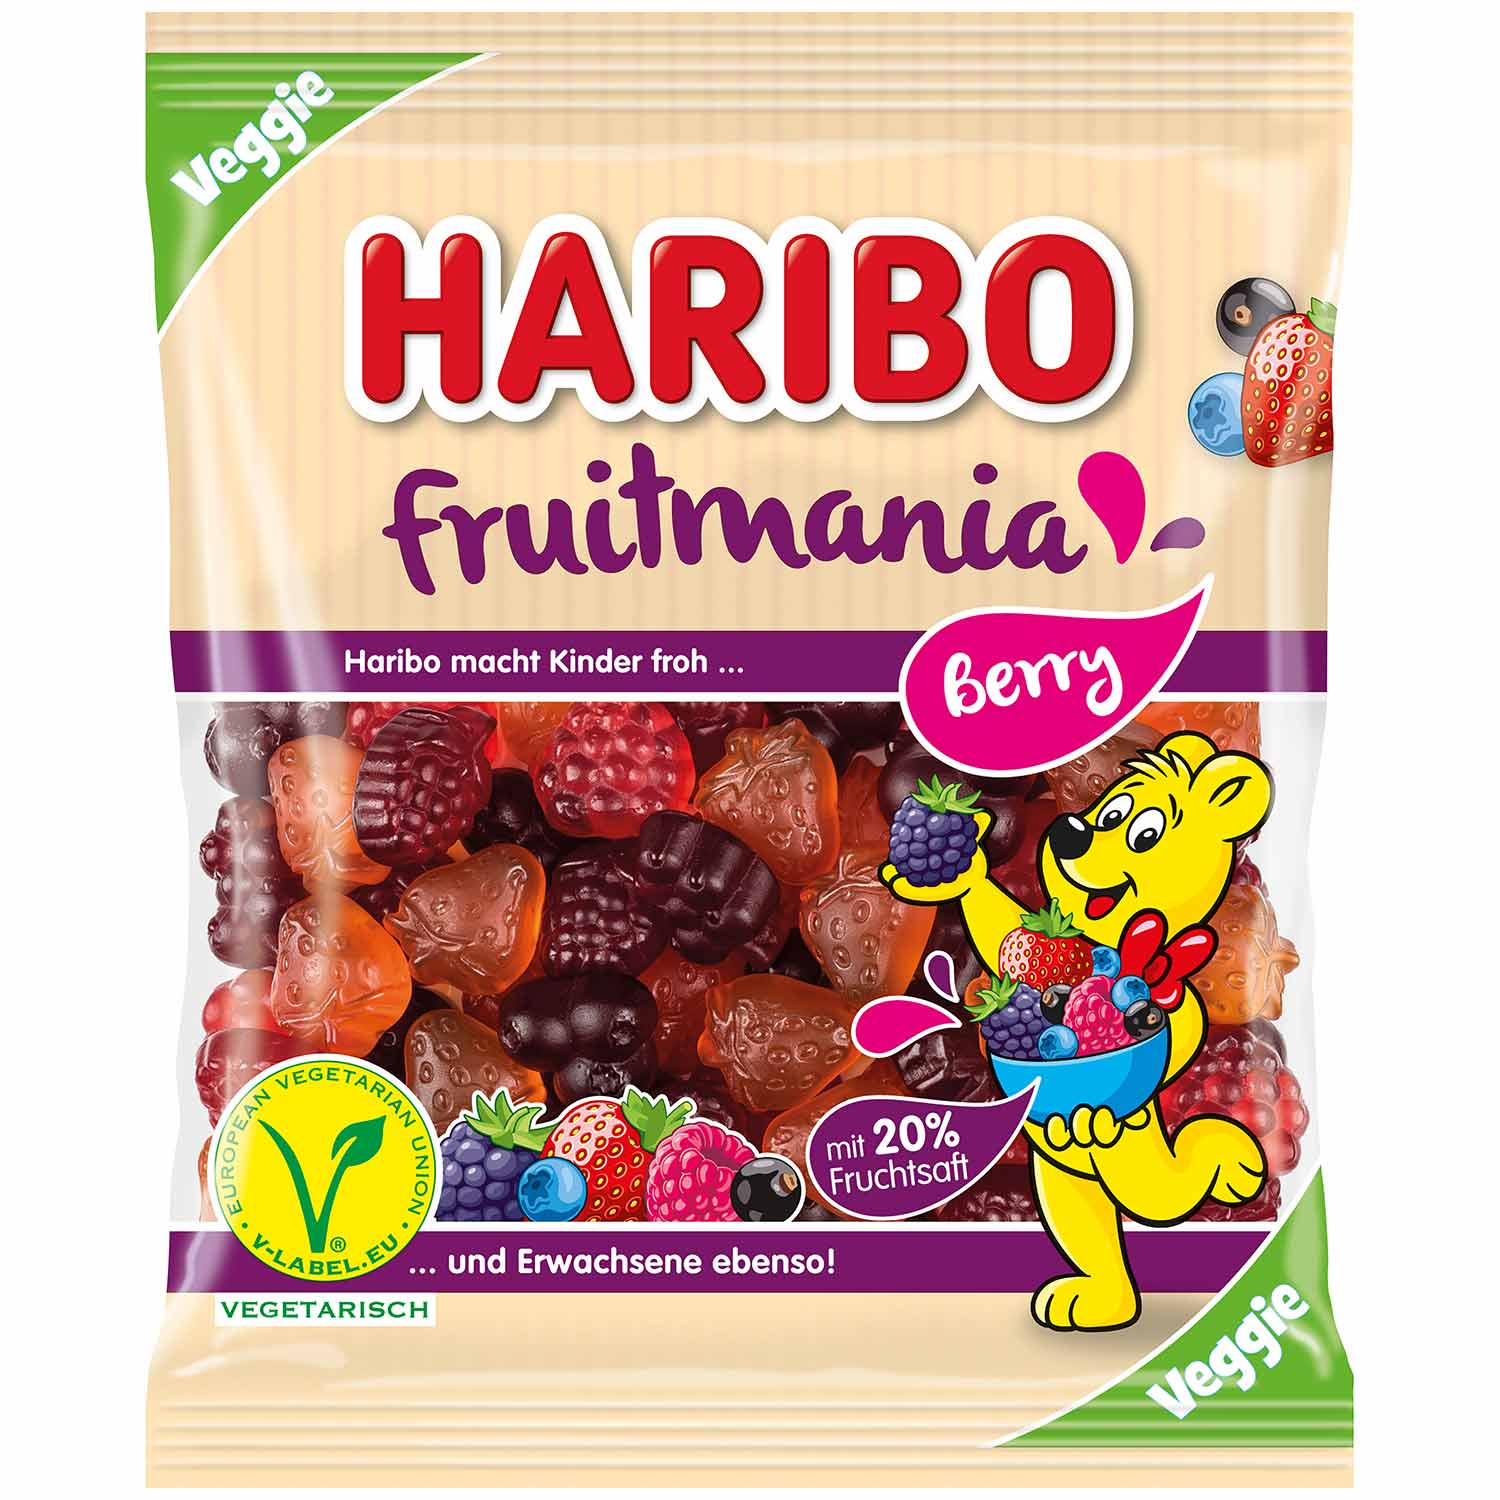 Haribo Fruitmania Berry vegetarisch 160g - Candyshop.ch